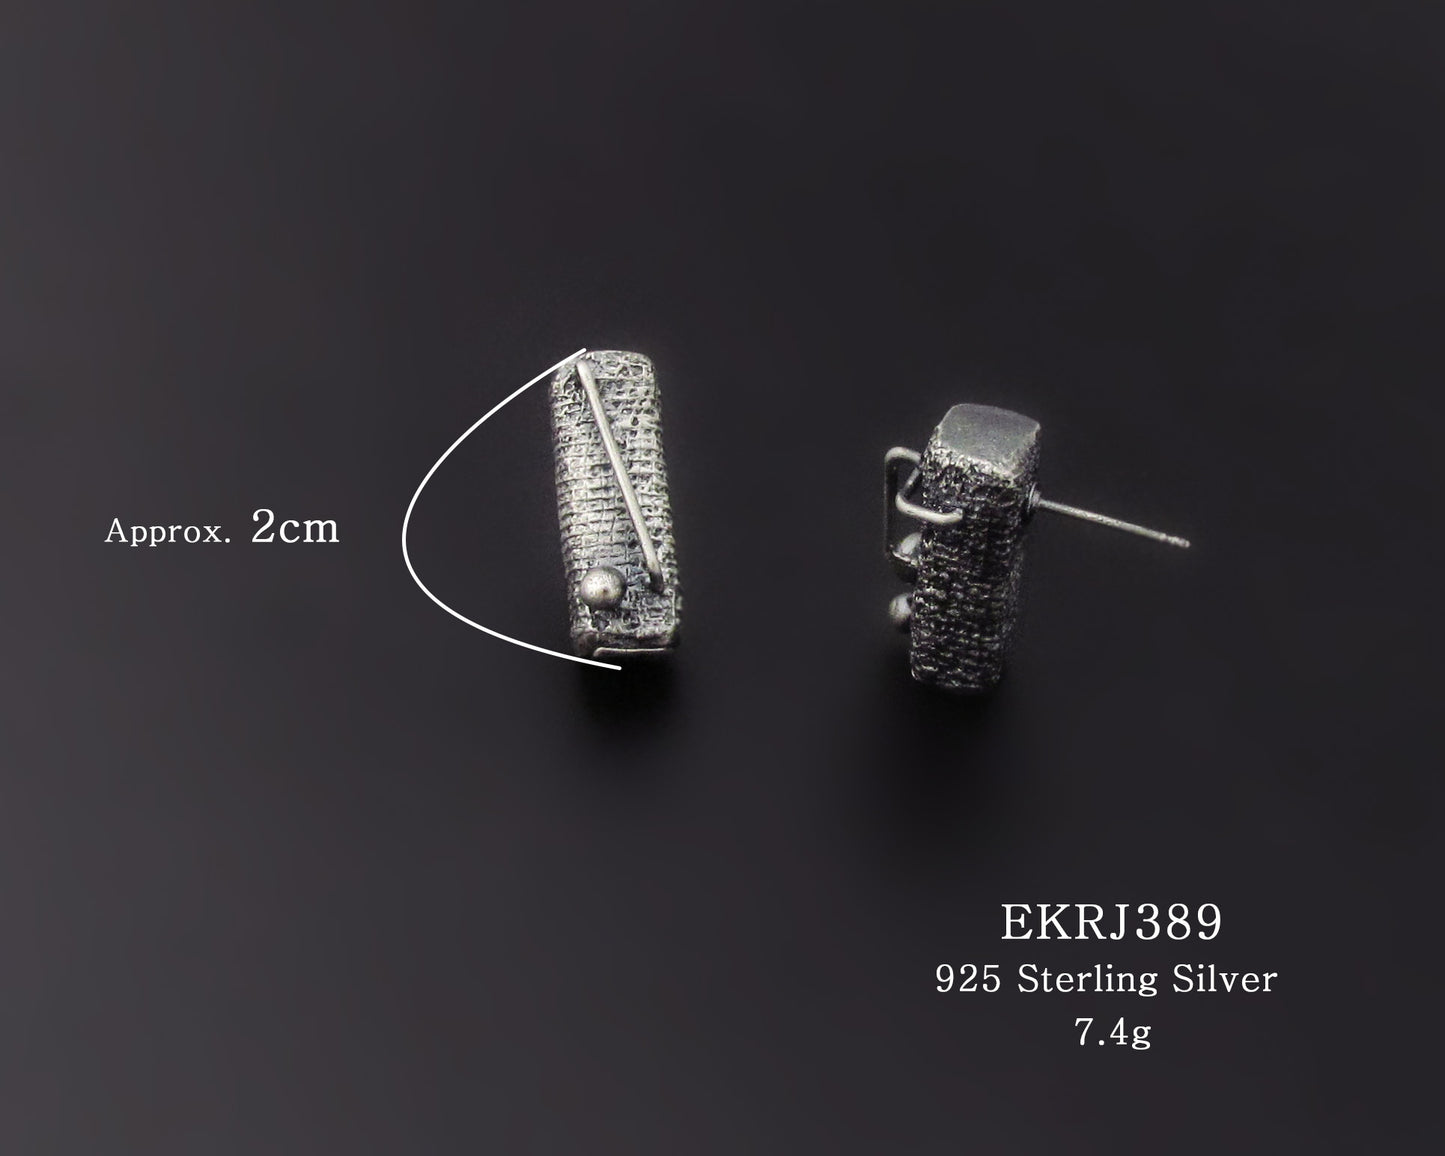 EKRJ389 Fabric texture Unique Handmade Silver Earrings